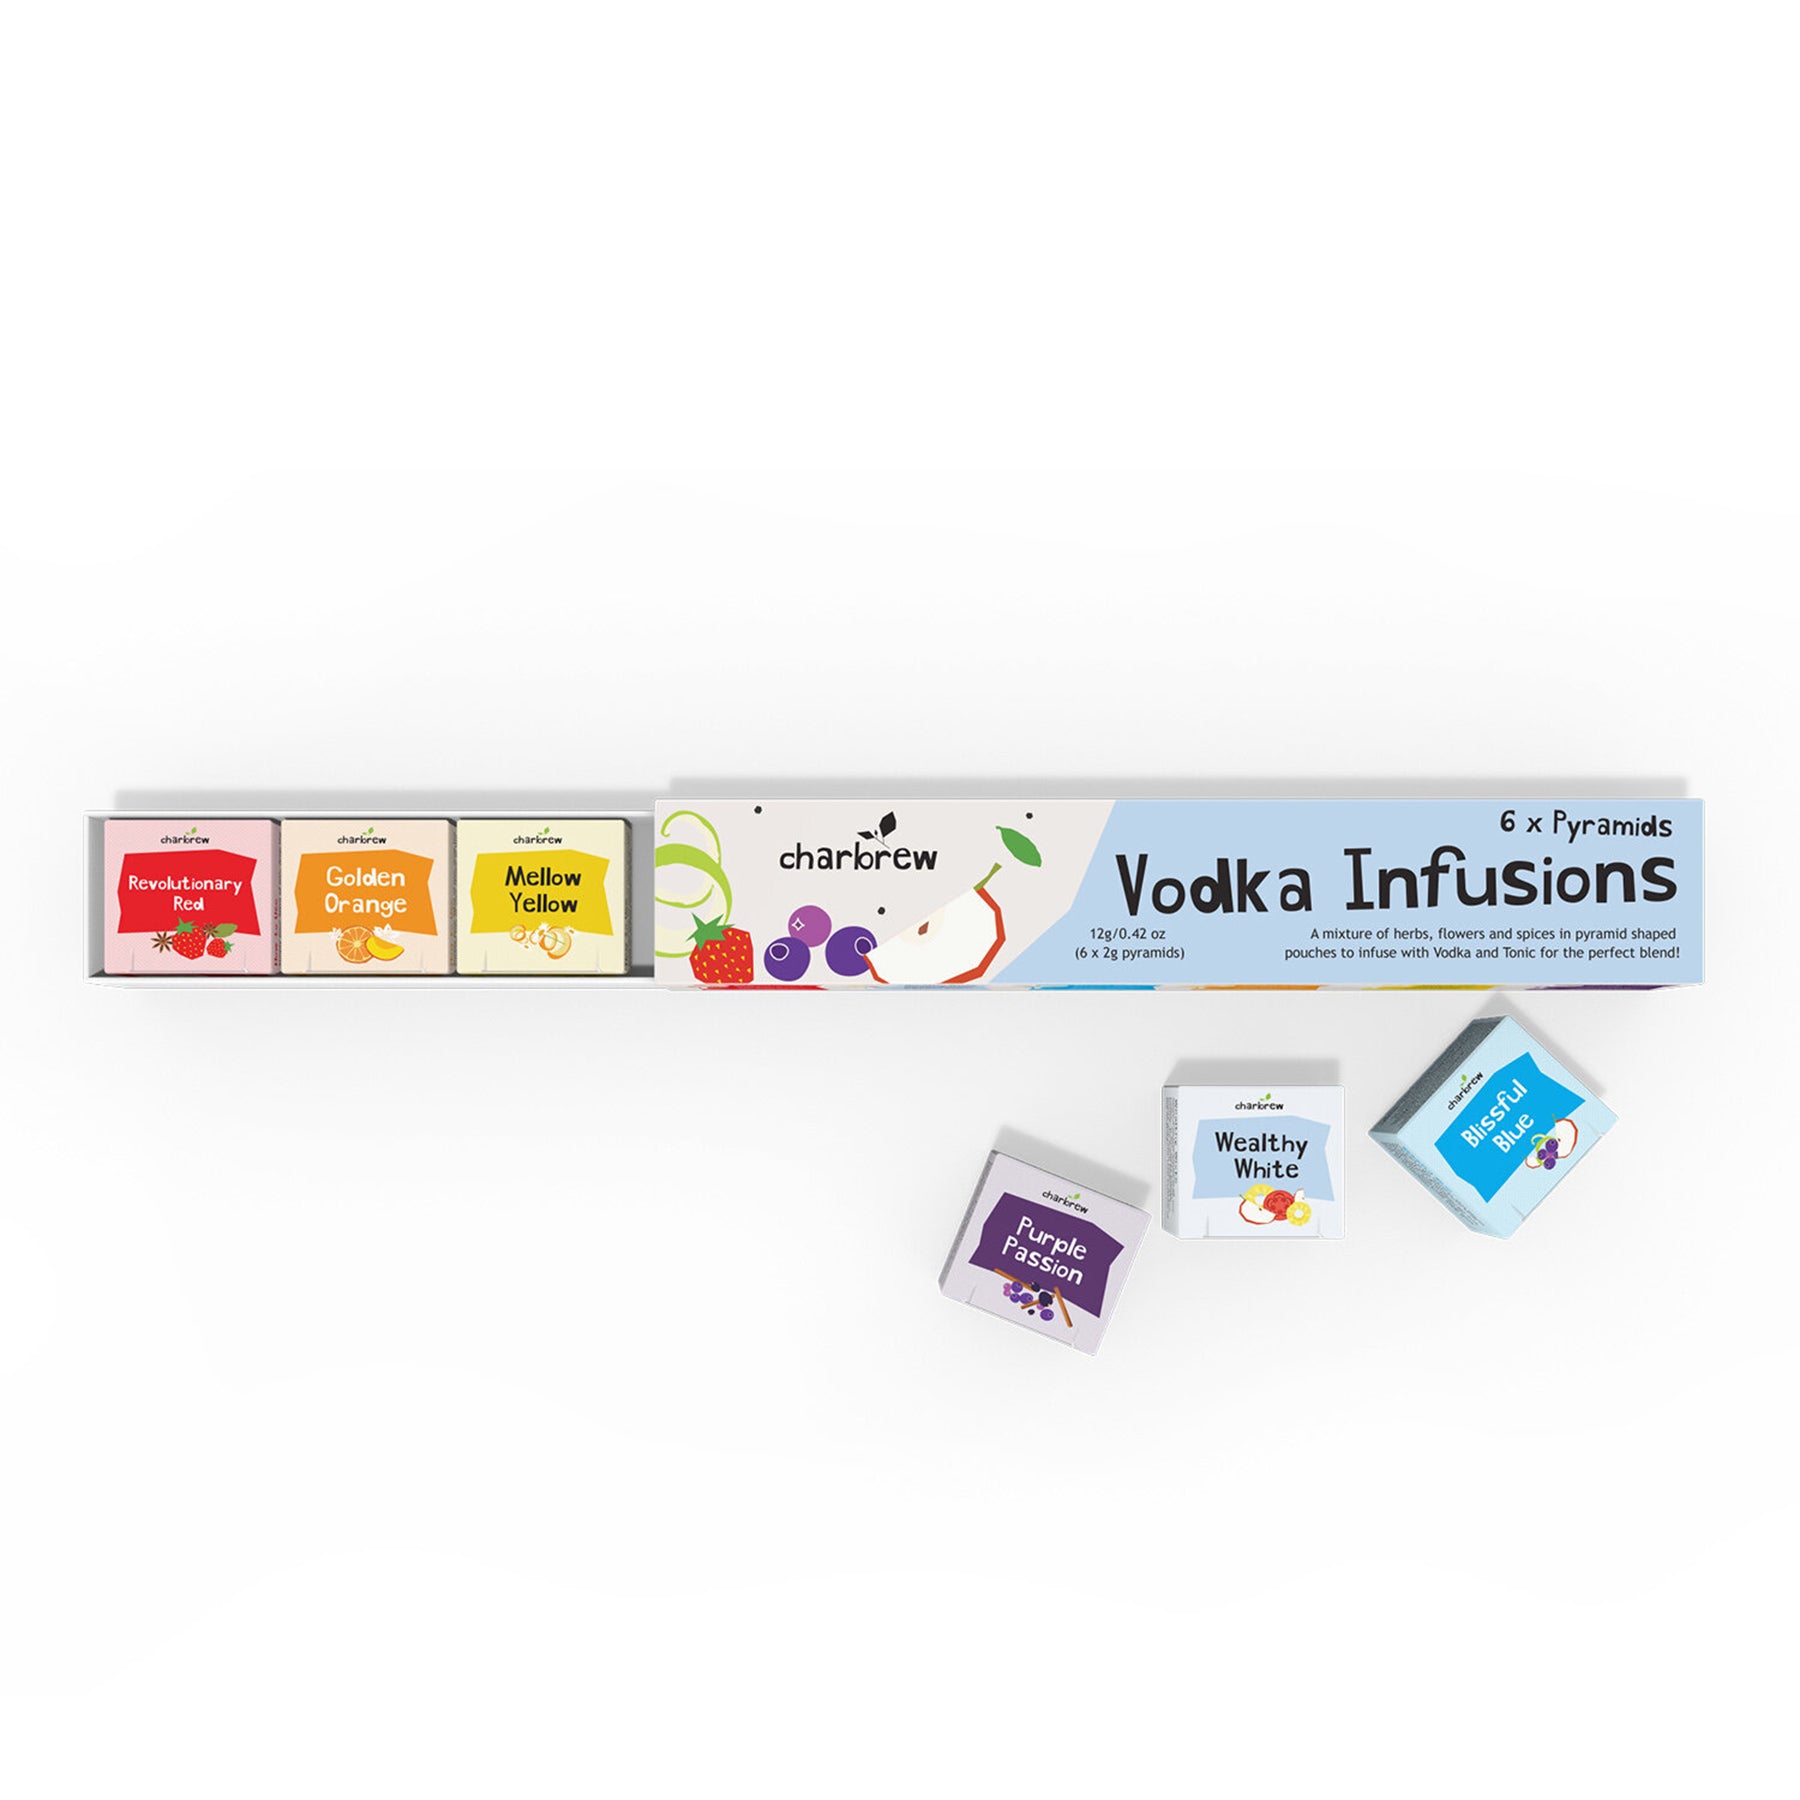 Vodka tea infusion gift set